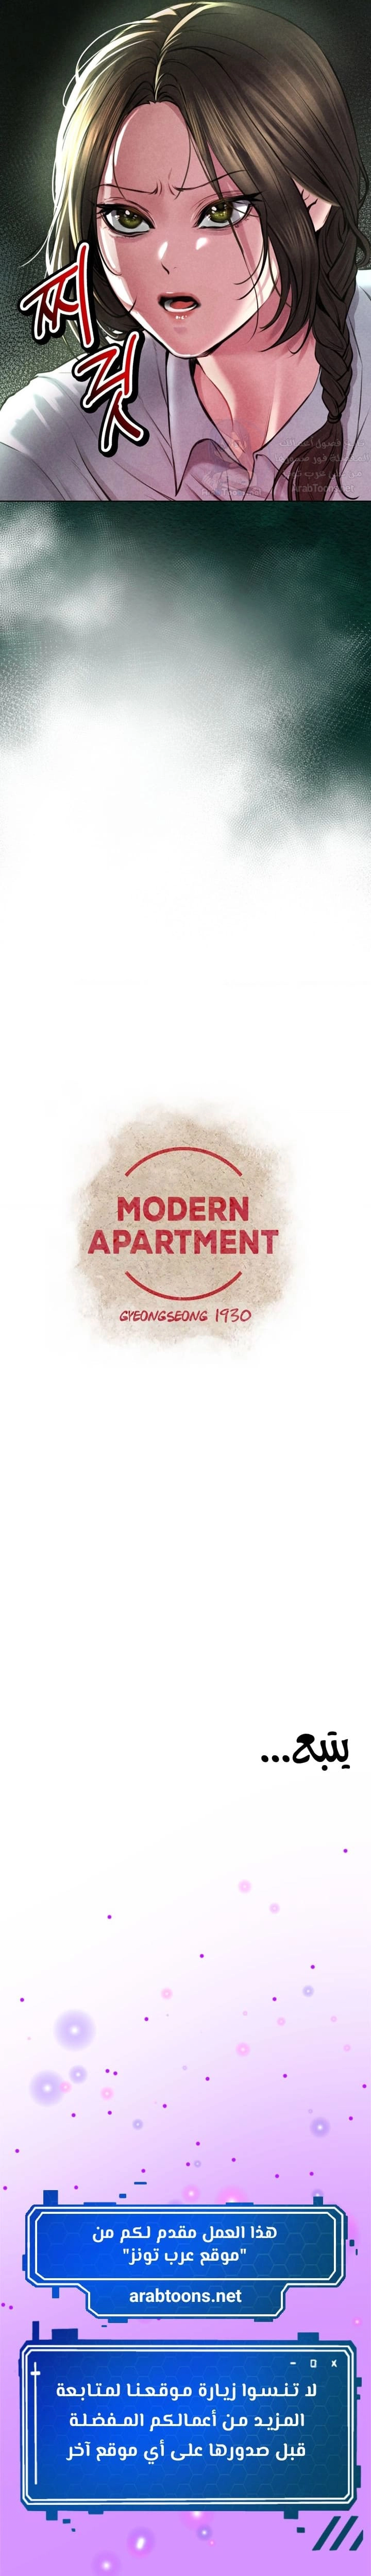 Modern Apartment, Gyeonseong 1930 - 8 - 662bce2c1082b.webp